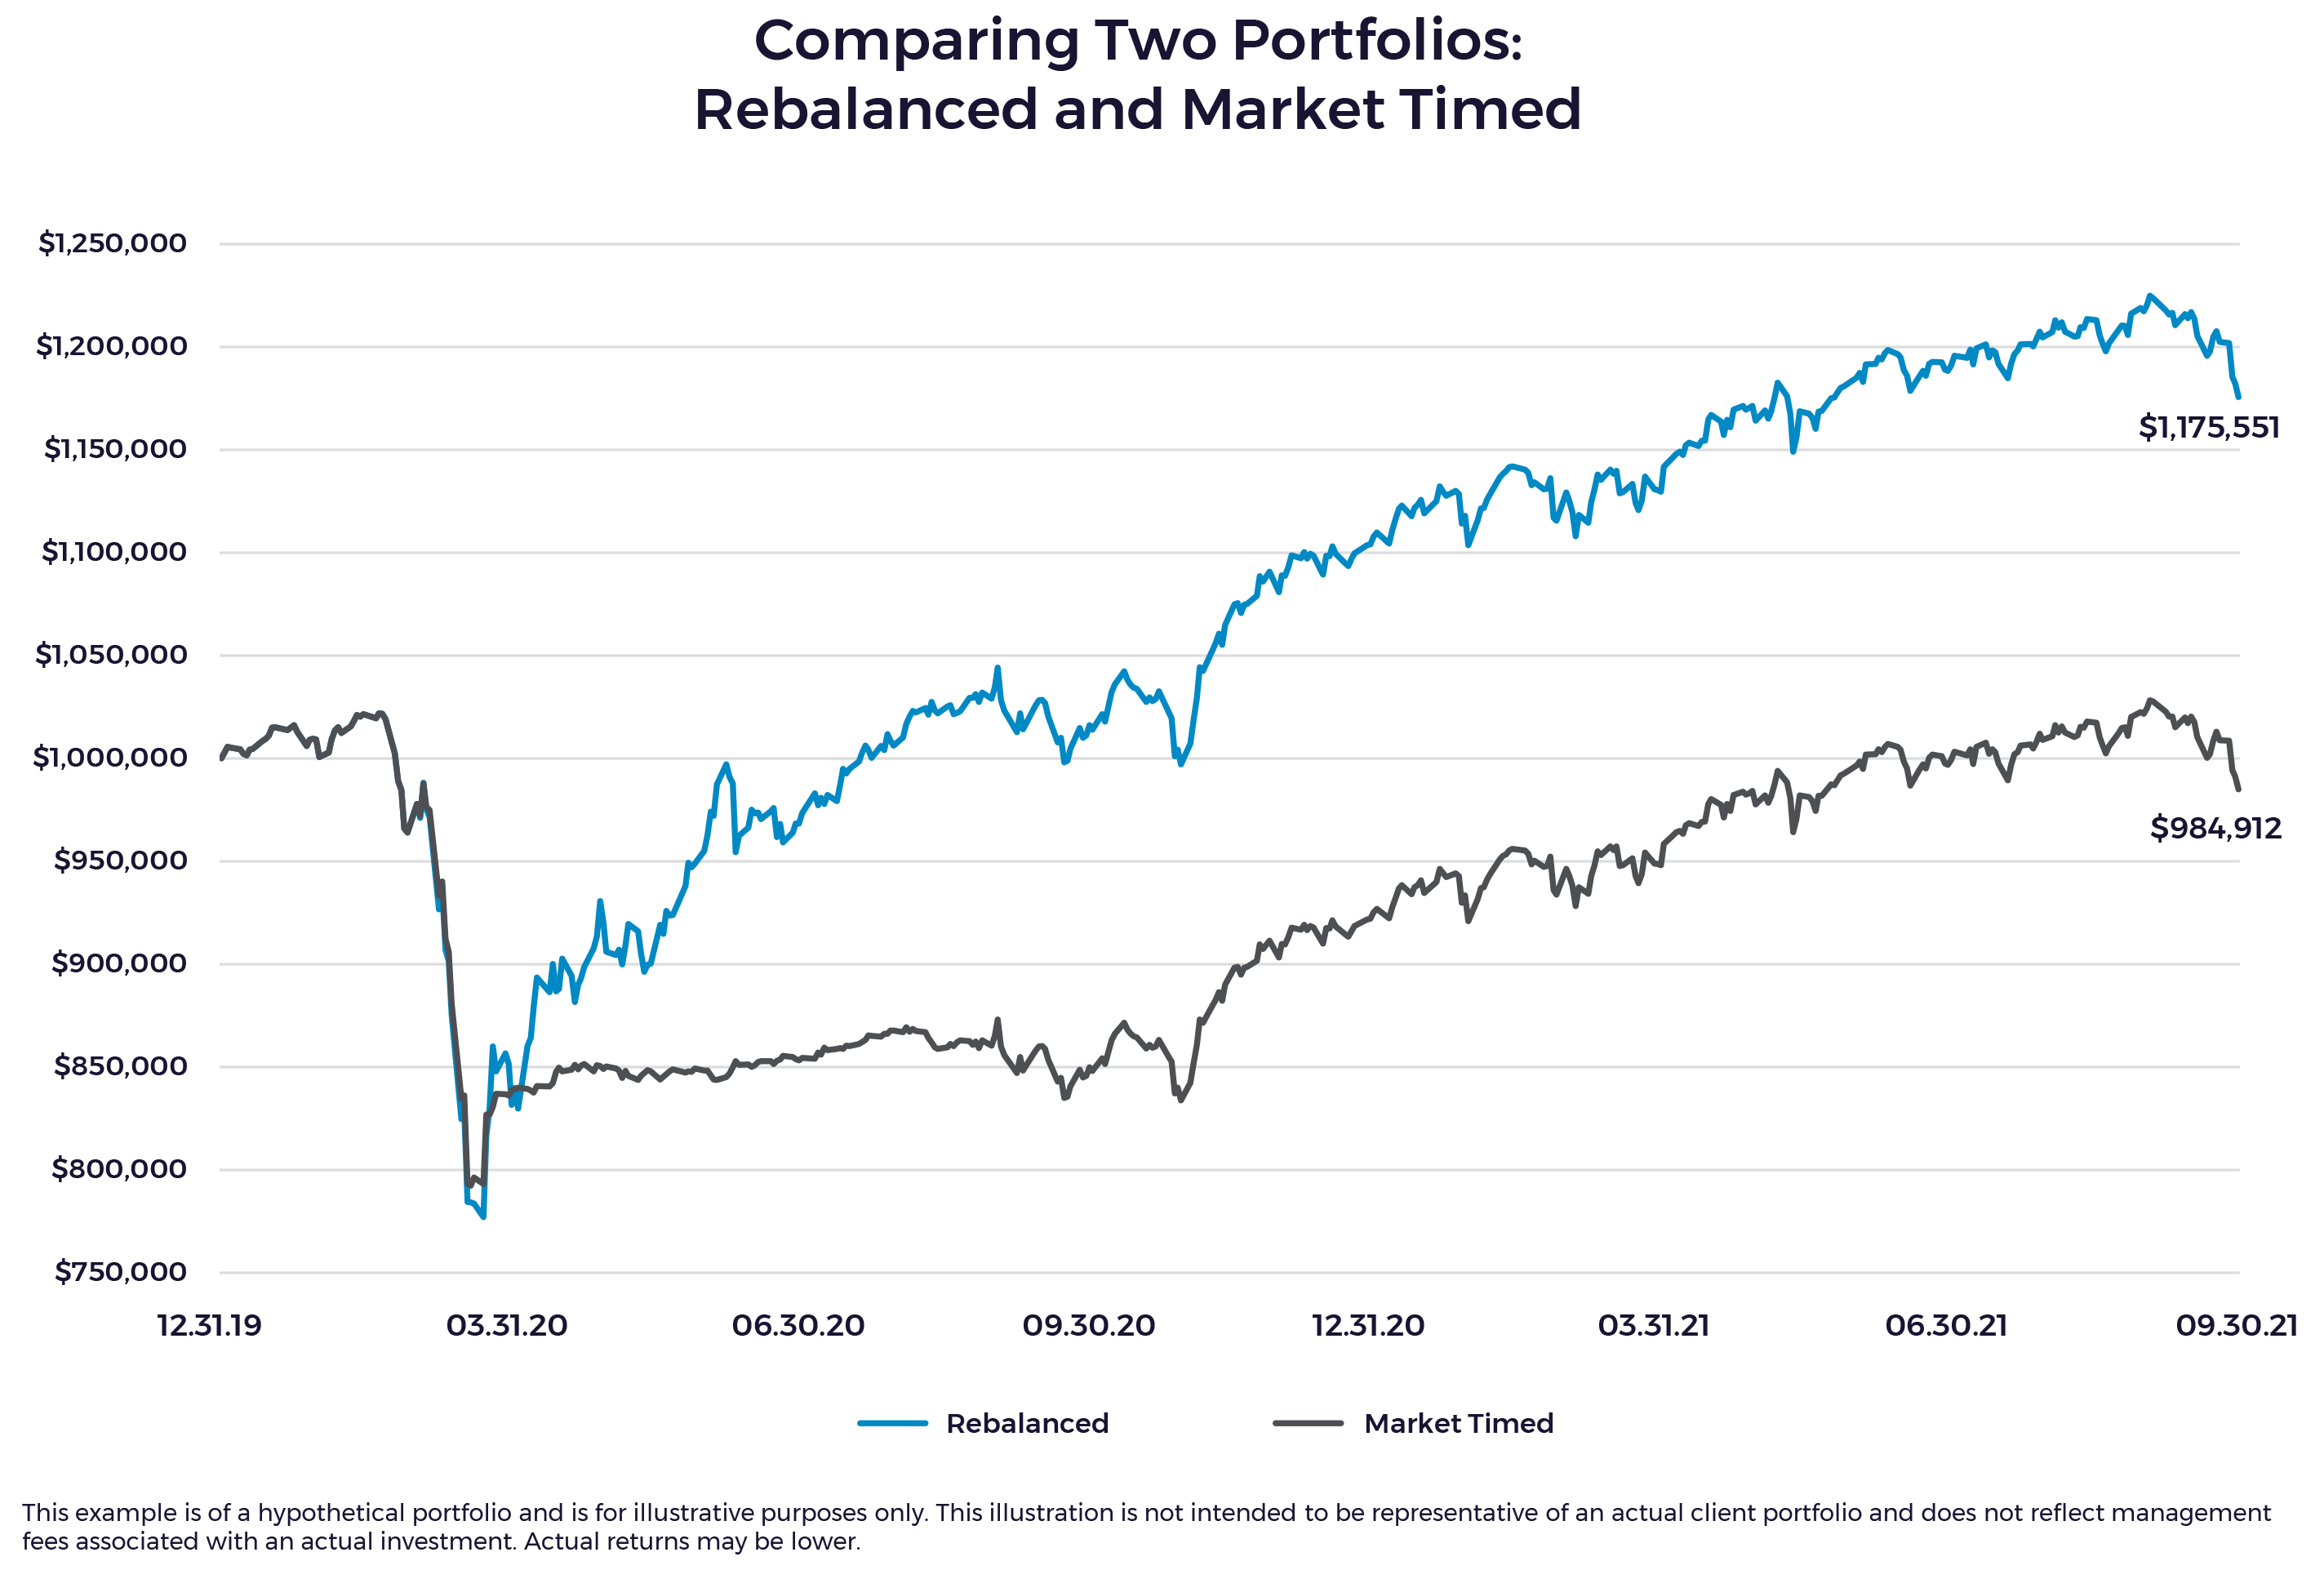 Chart Comparing Rebalanced and Market Timed Portfolios